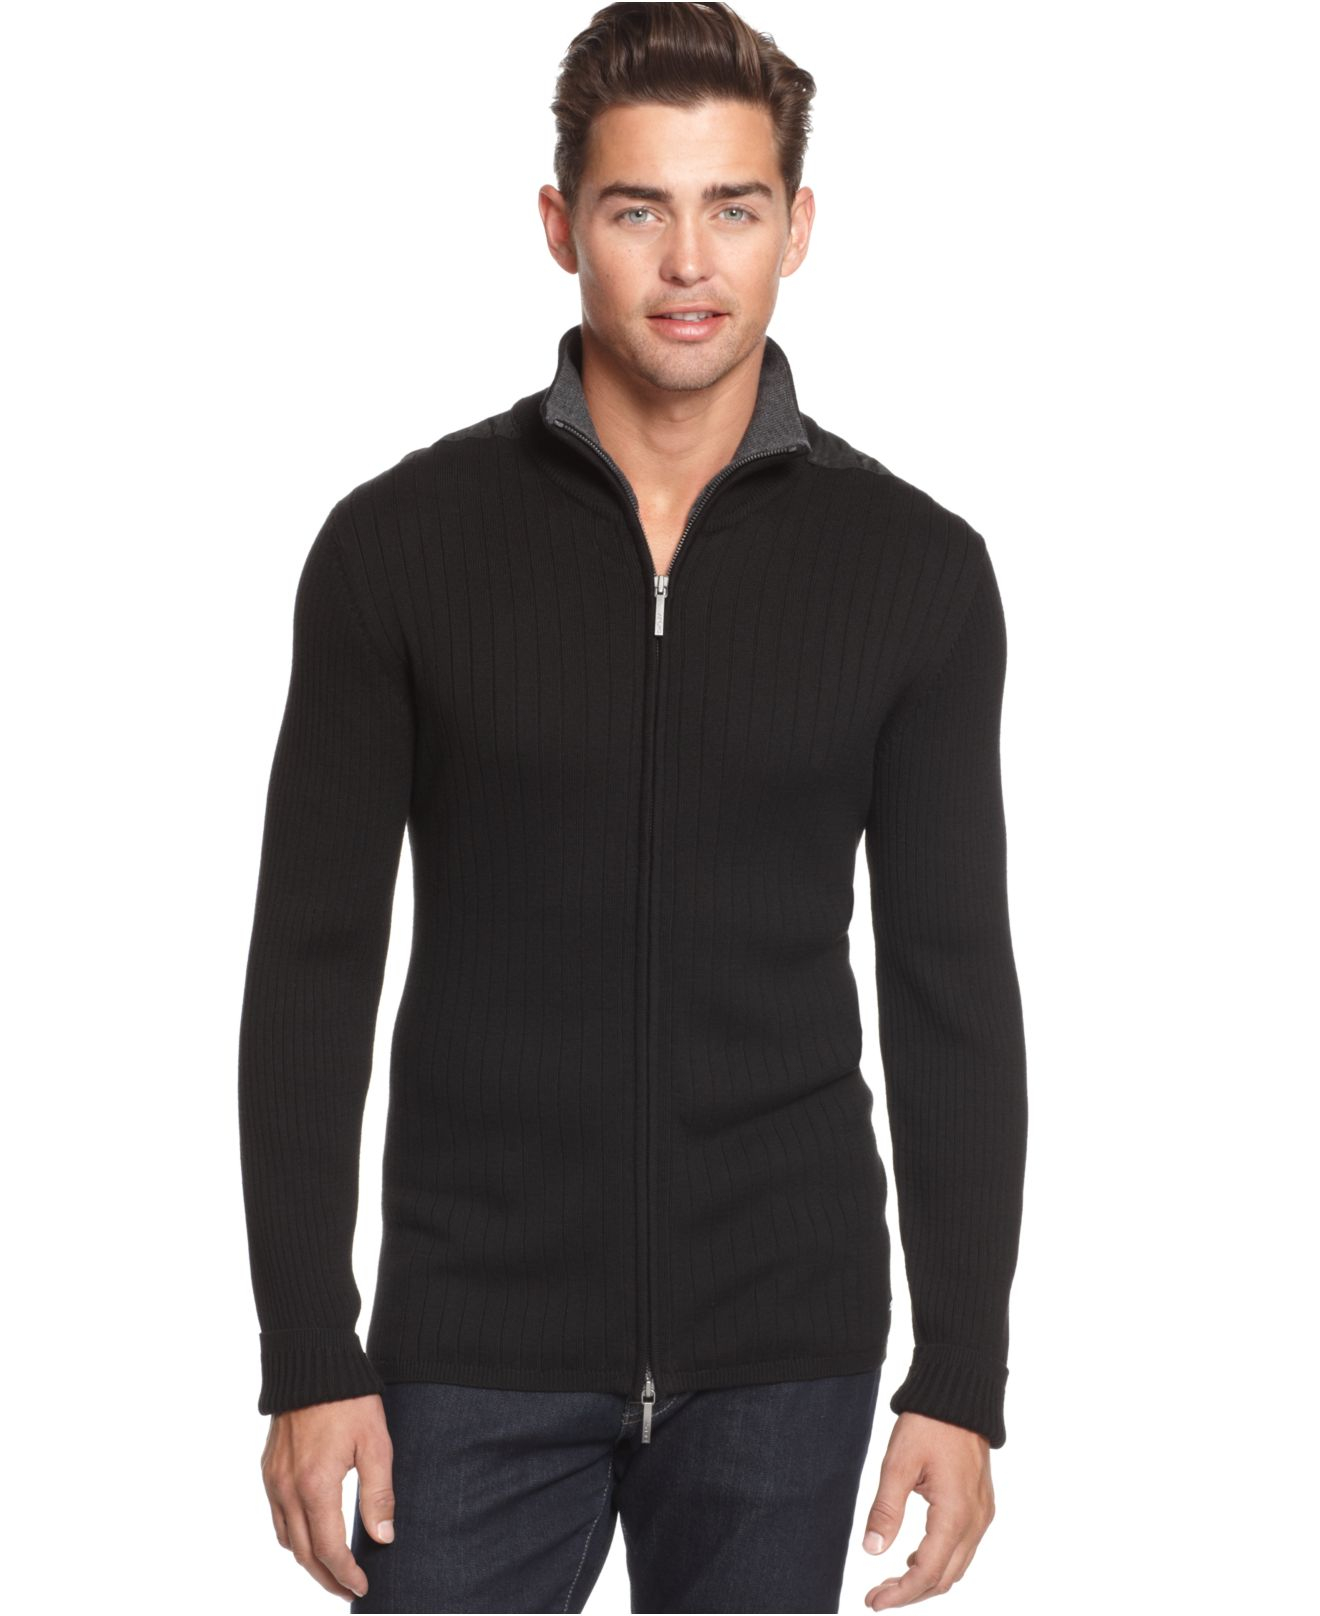 Aliexpress.com : Buy 2018 Winter New Style Pure Sweater